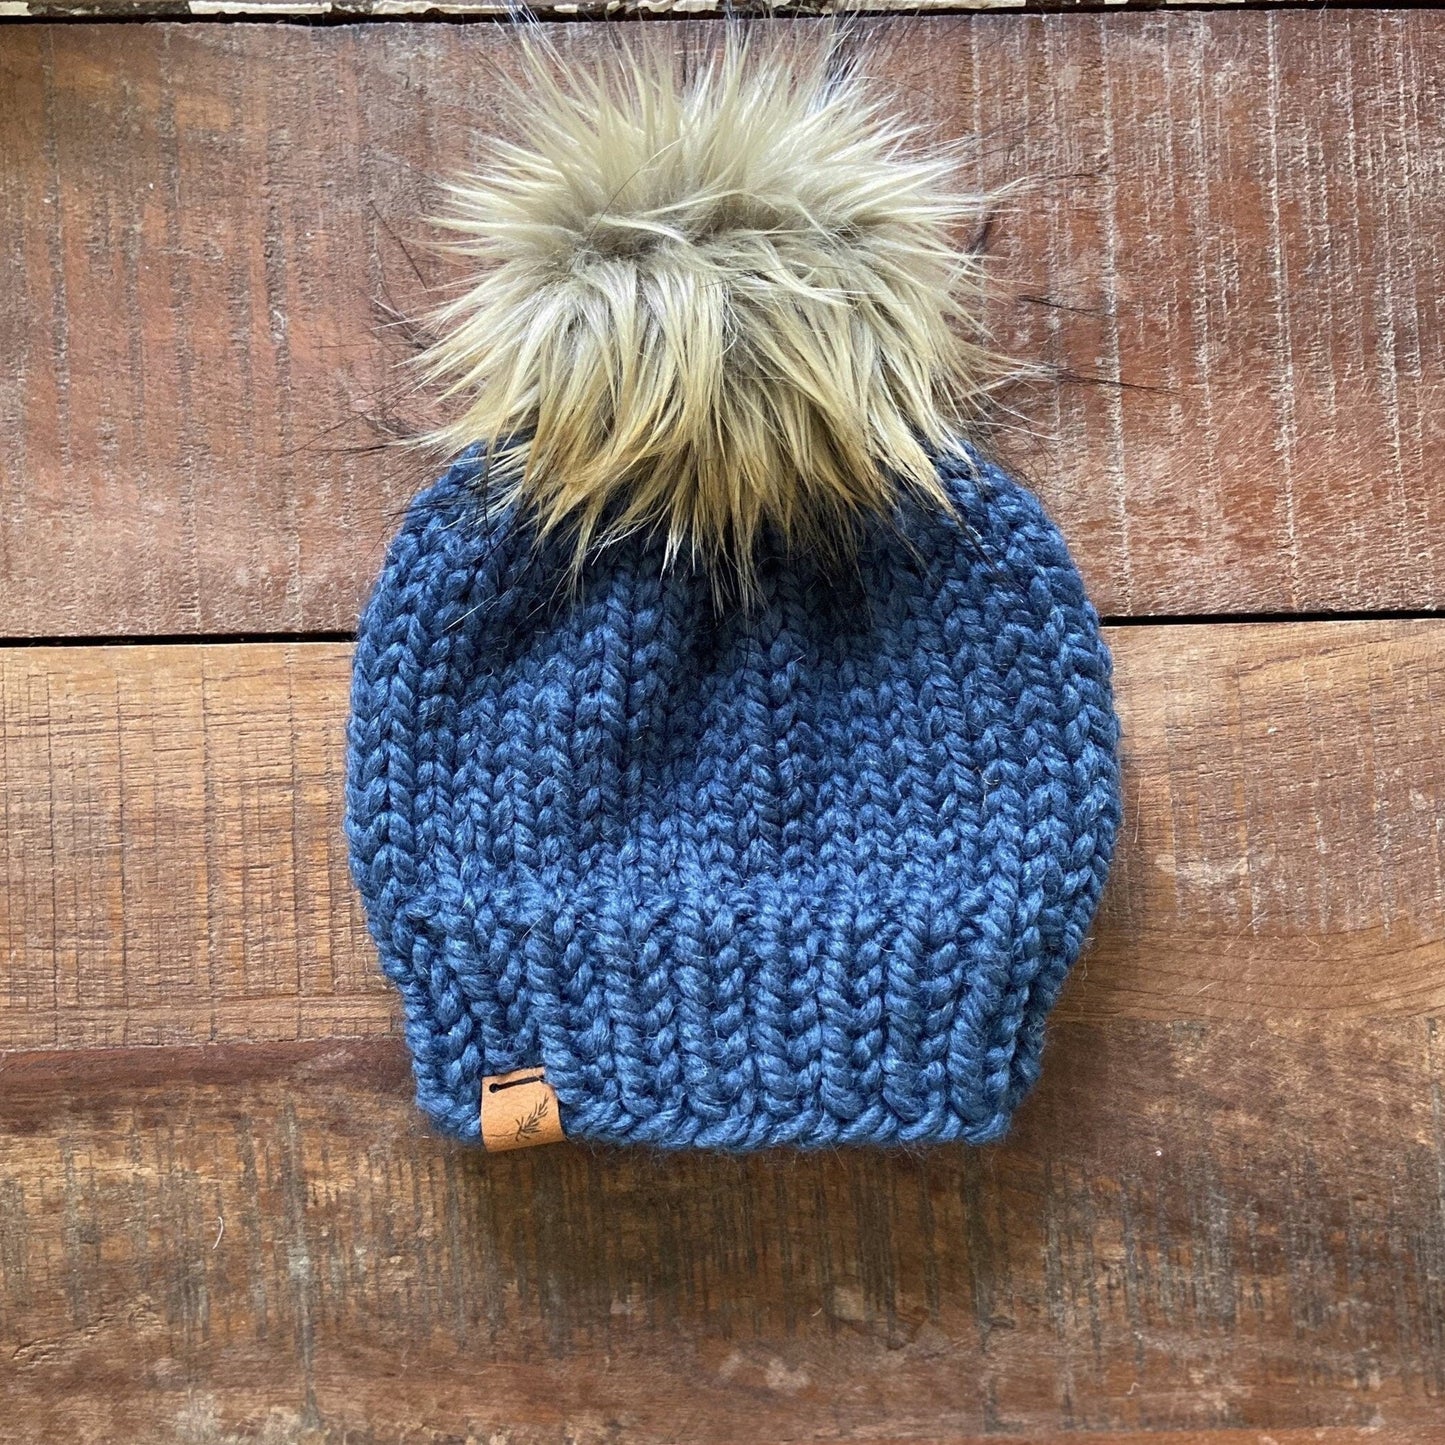 Custom Child Knit Hat with Pom Pom - Choose Yarn Color and Pom Pom